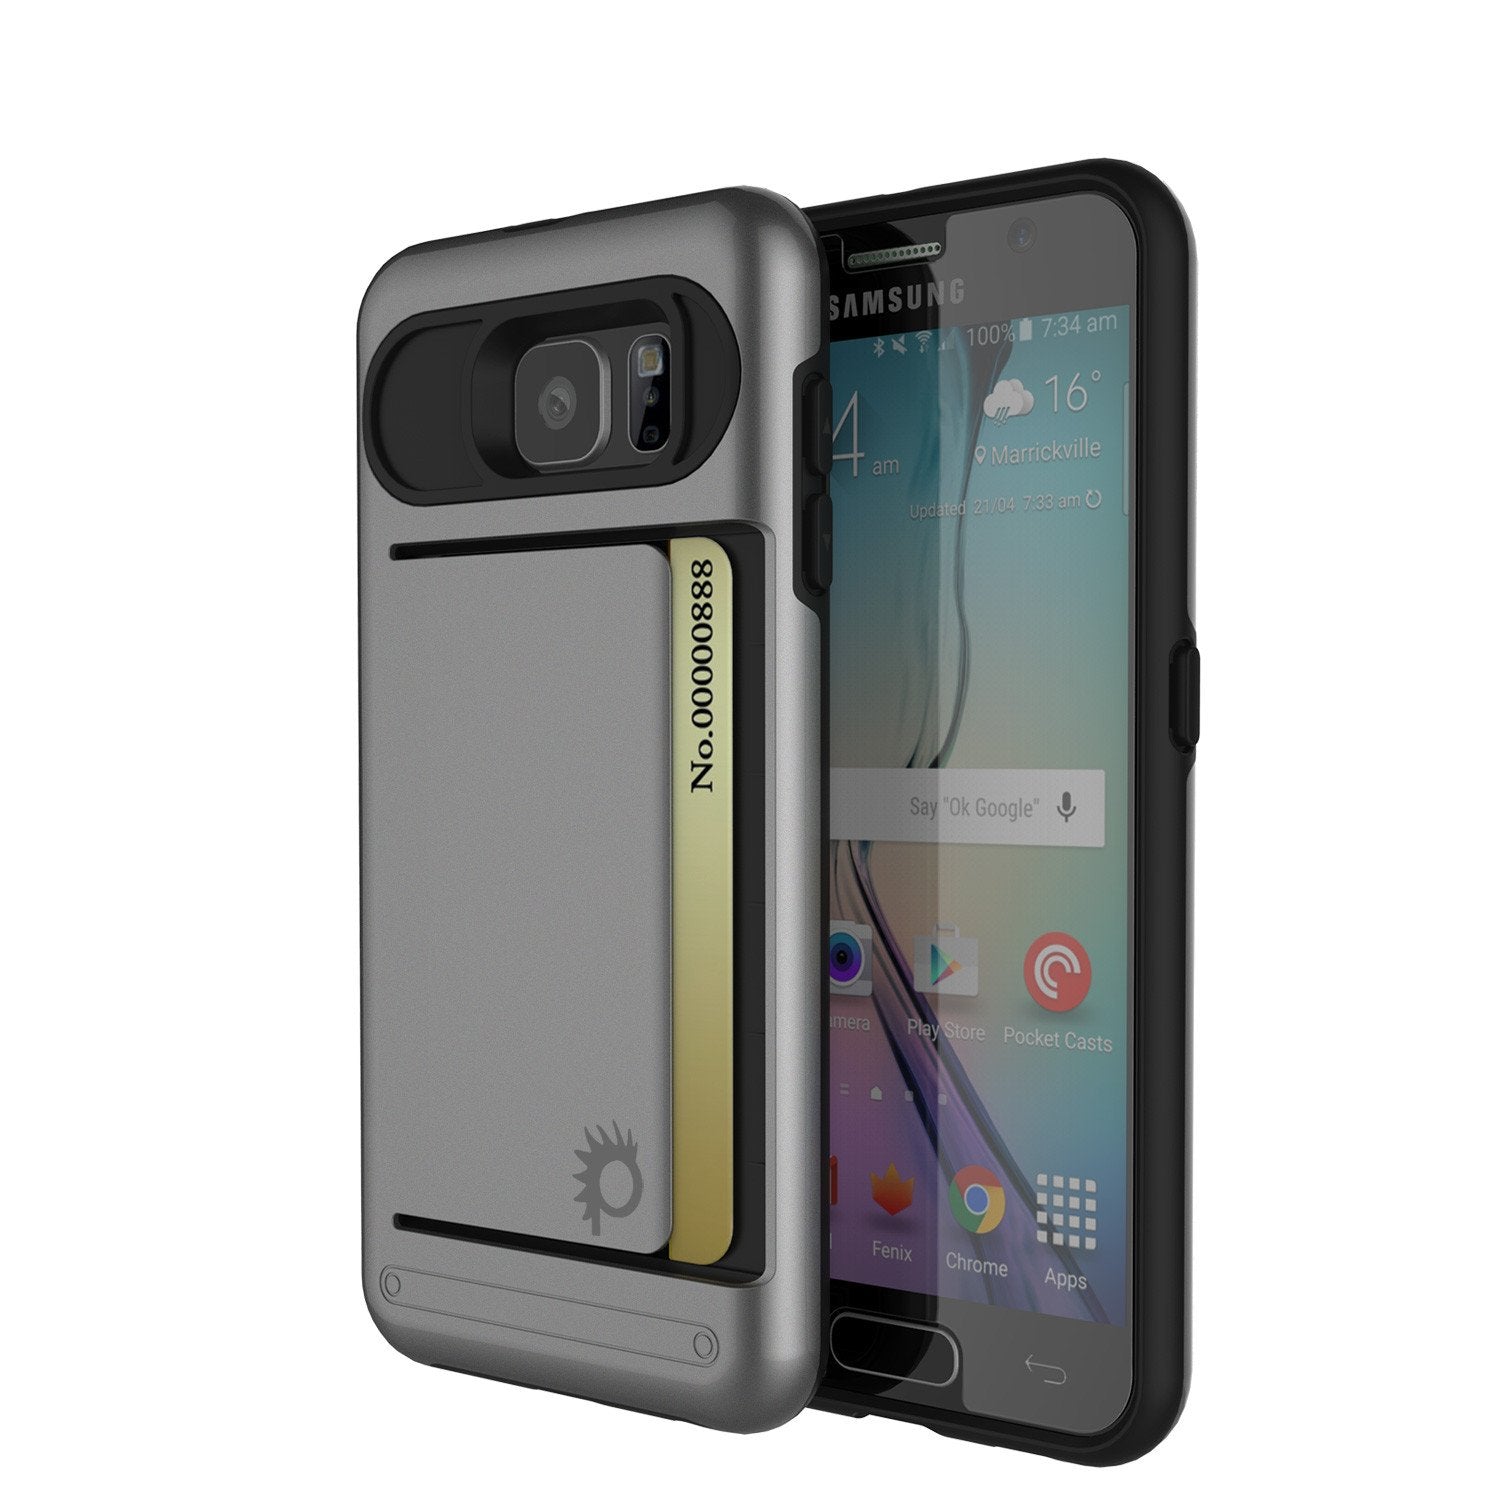 Galaxy s6 Case PunkCase CLUTCH Grey Series Slim Armor Soft Cover Case w/ Tempered Glass - PunkCase NZ